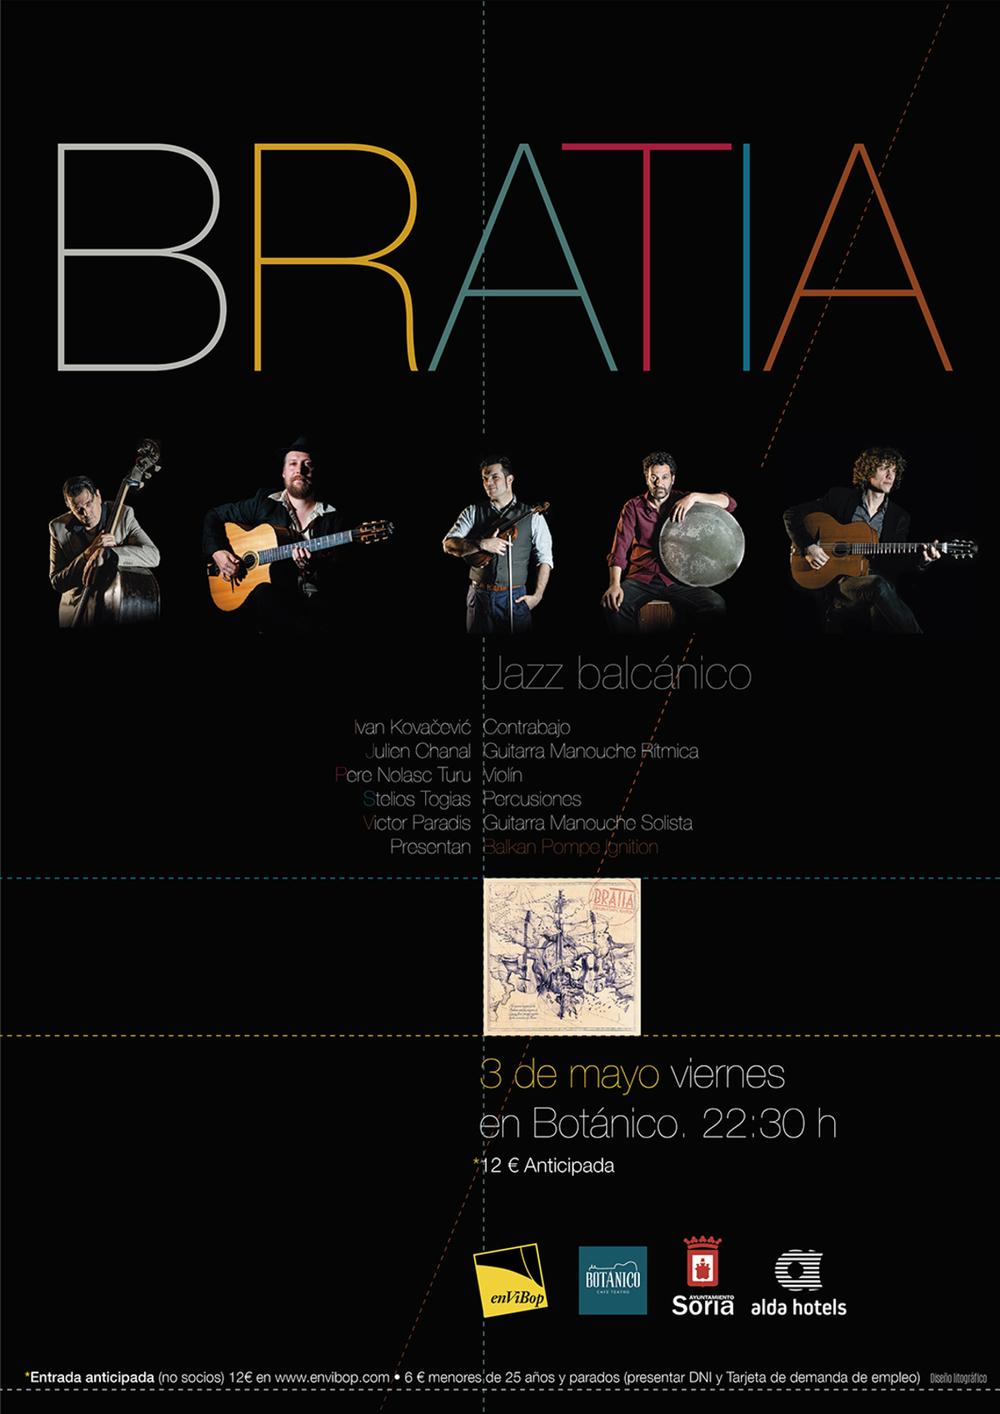 Bratia llega el 3 de mayo al Botánico de Soria